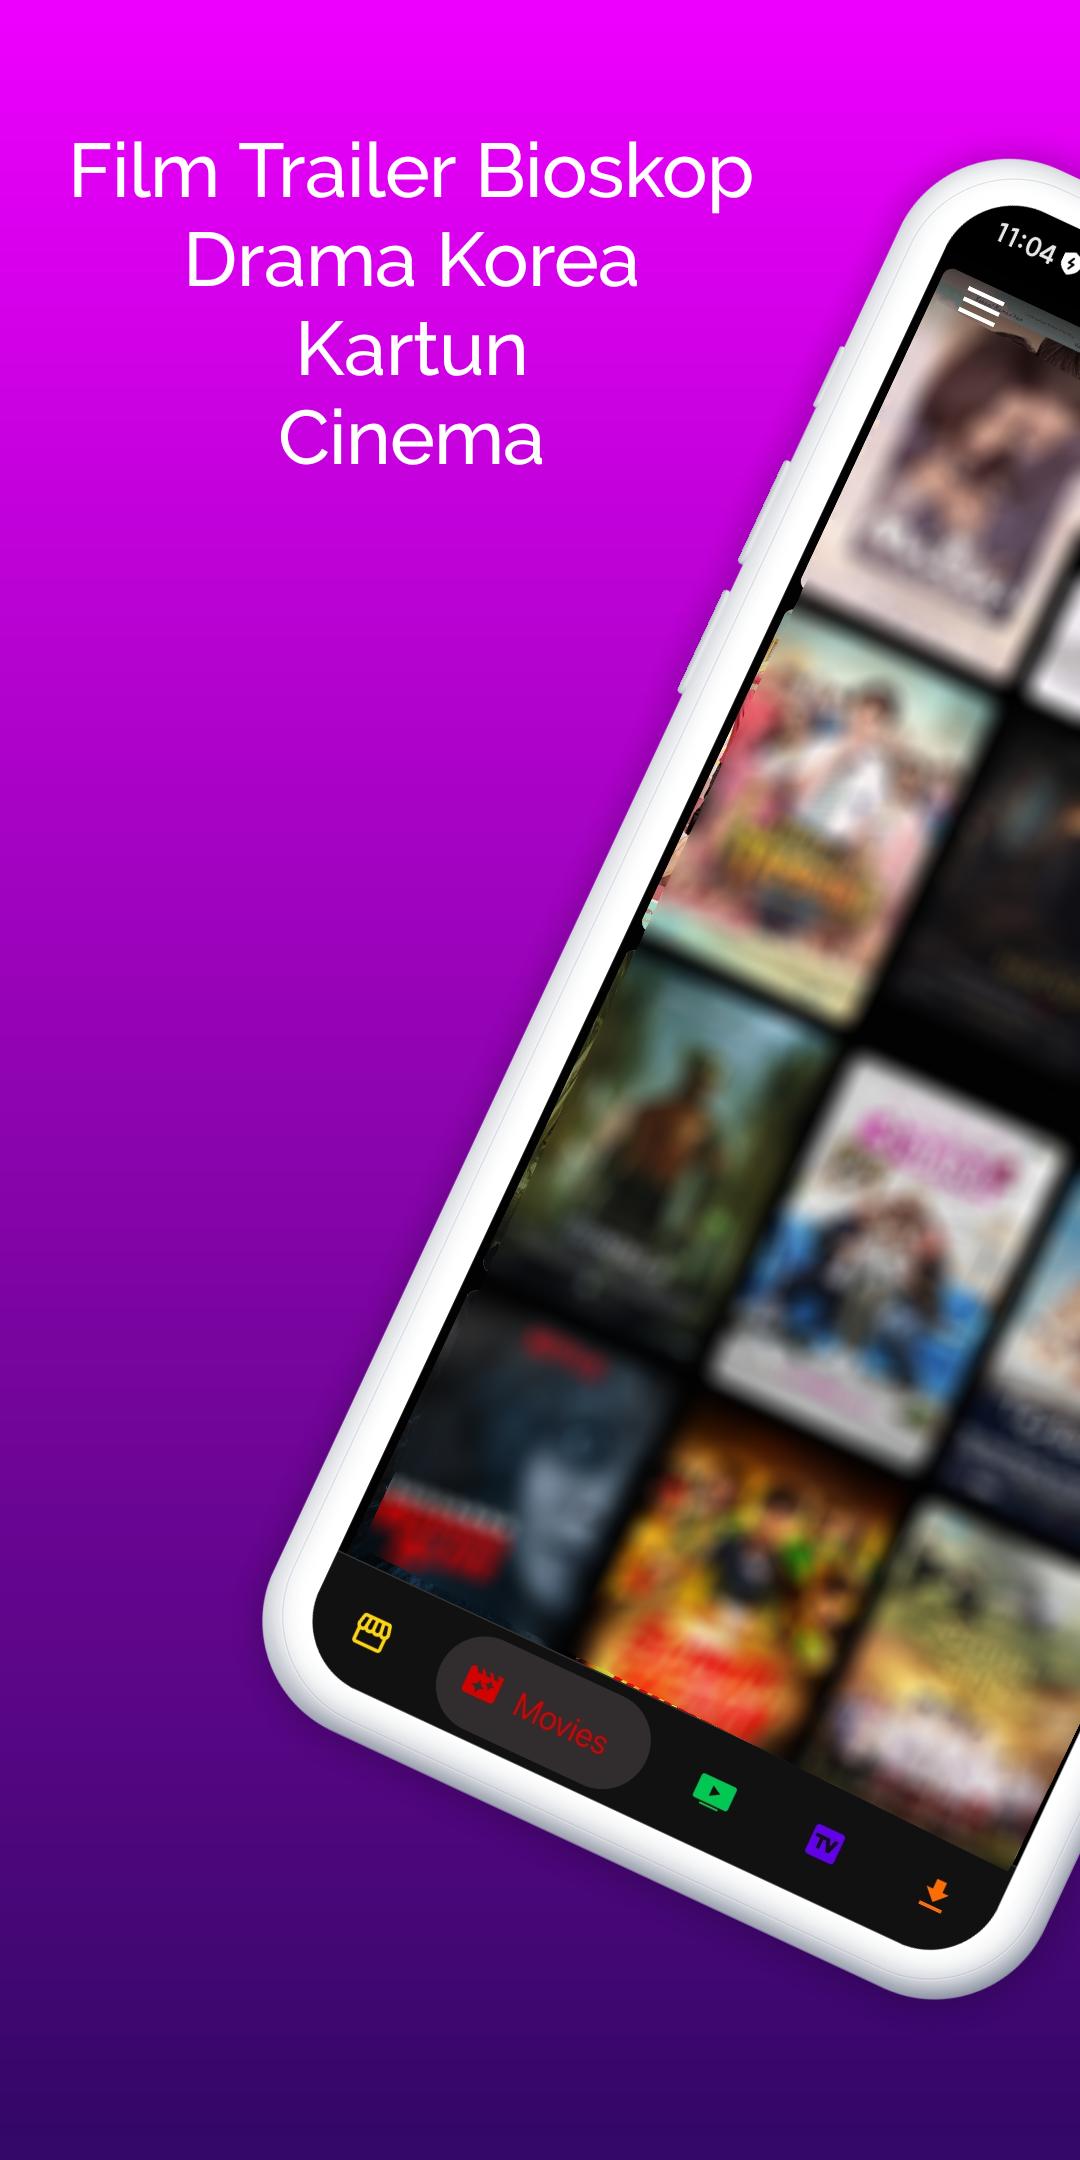 Indo XXI - Nonton TV & Film Sub Indo for Android - APK Download